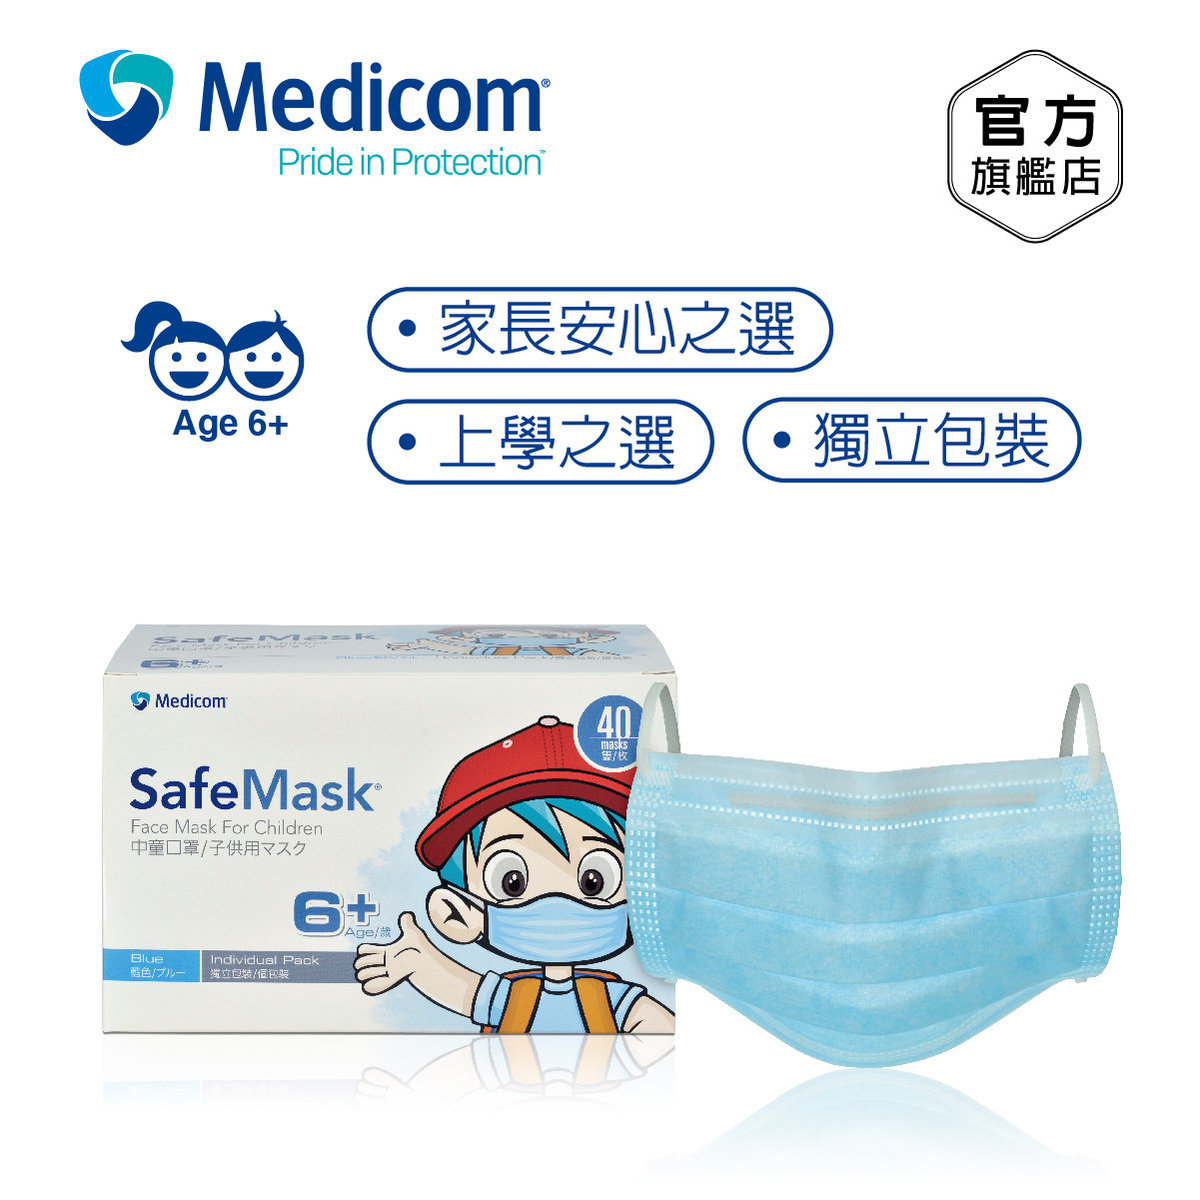 SafeMask 醫用中童口罩獨立包裝 - 藍色 40片/盒 #GMK200015